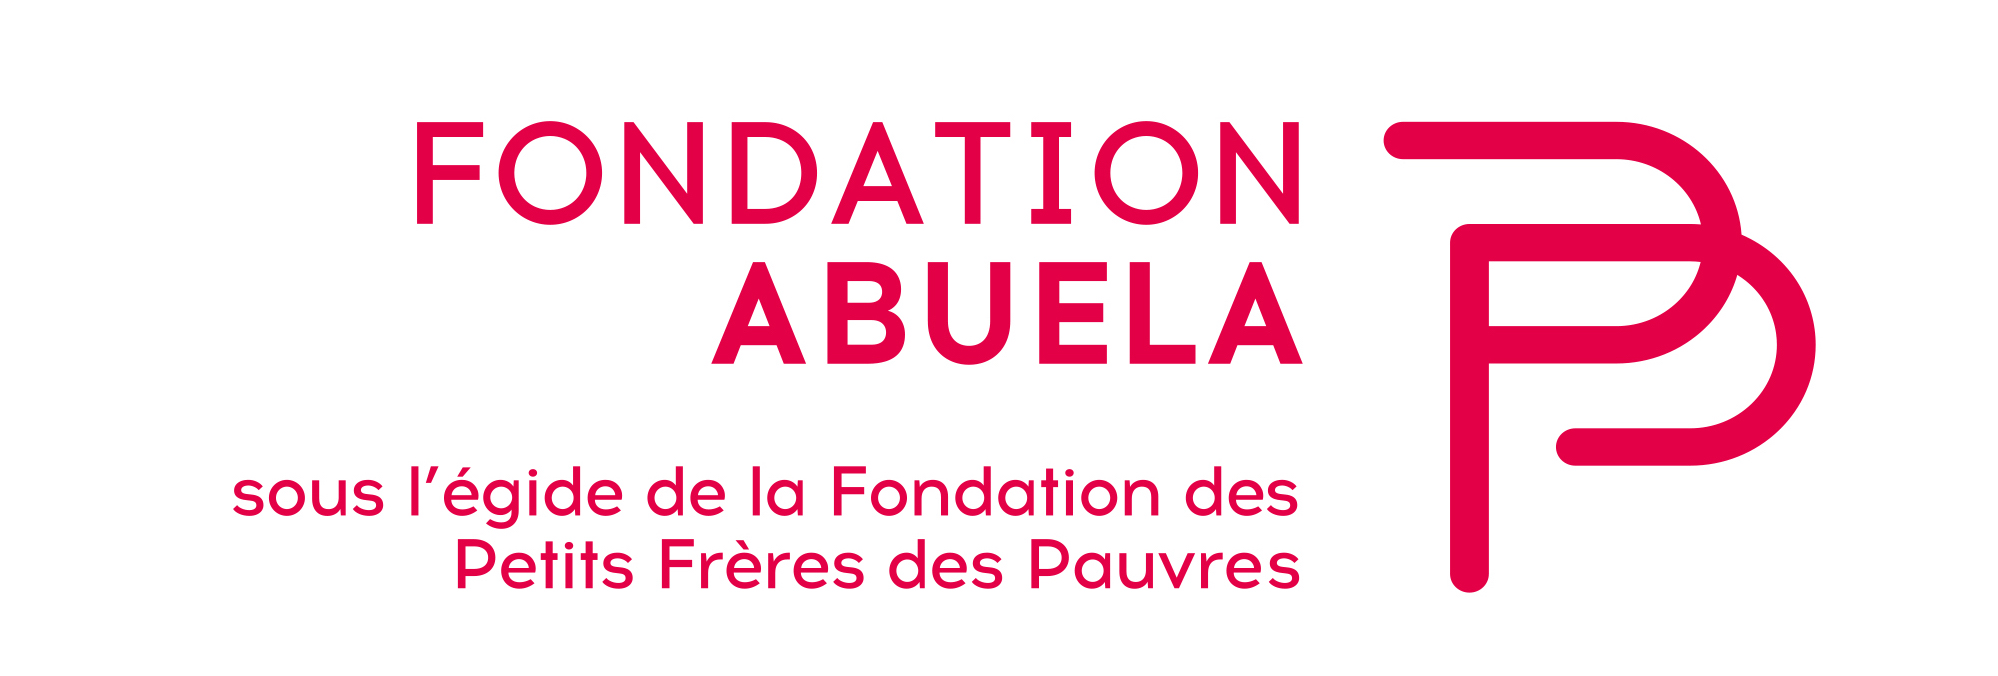 Logo_PFDP_Fondation Othenin_Posi_Rouge_RVB